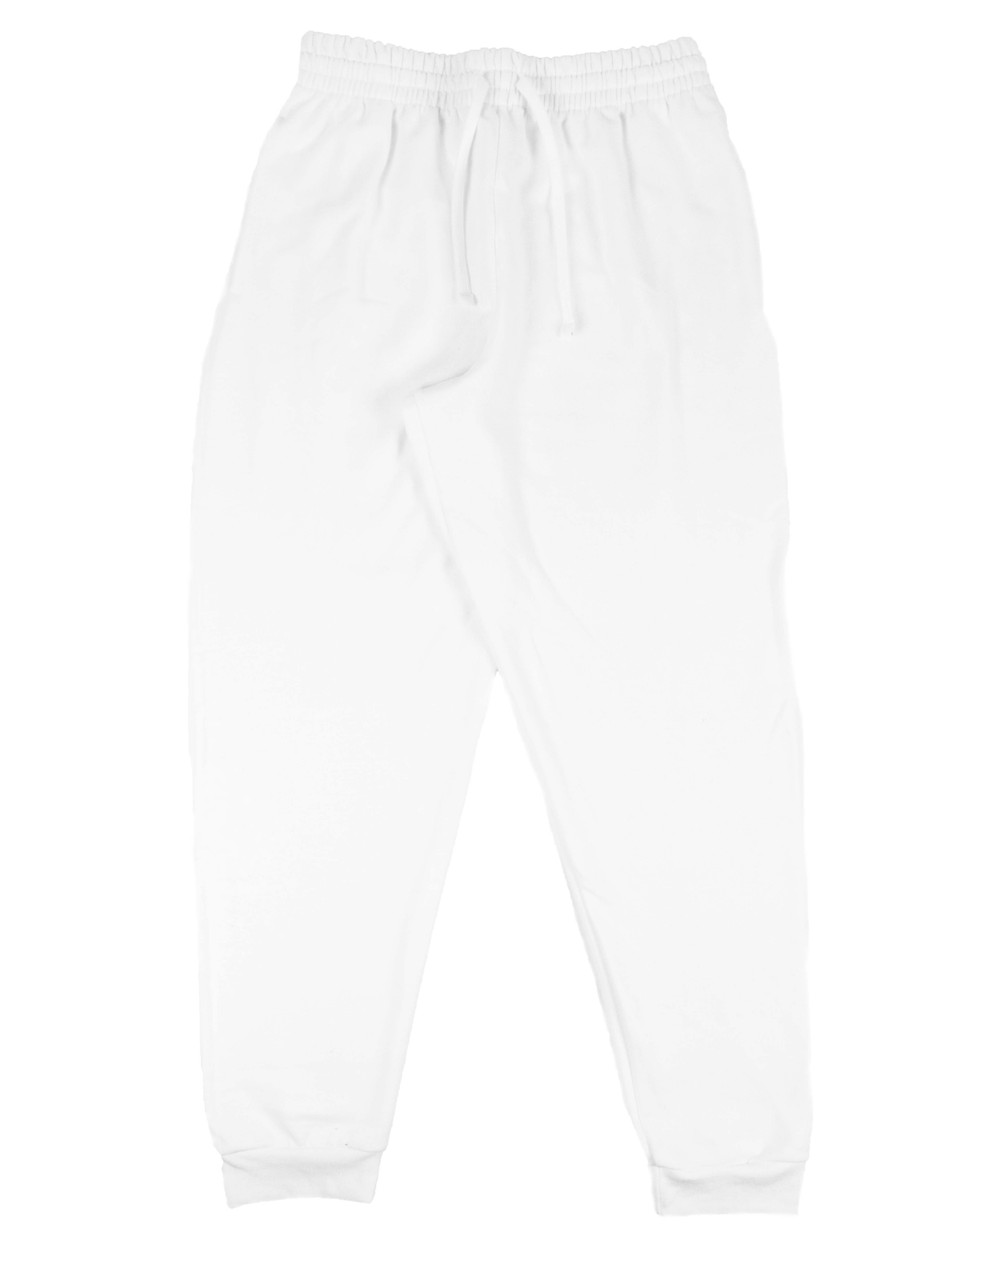 Plain Pocketed Sweatpants (White)